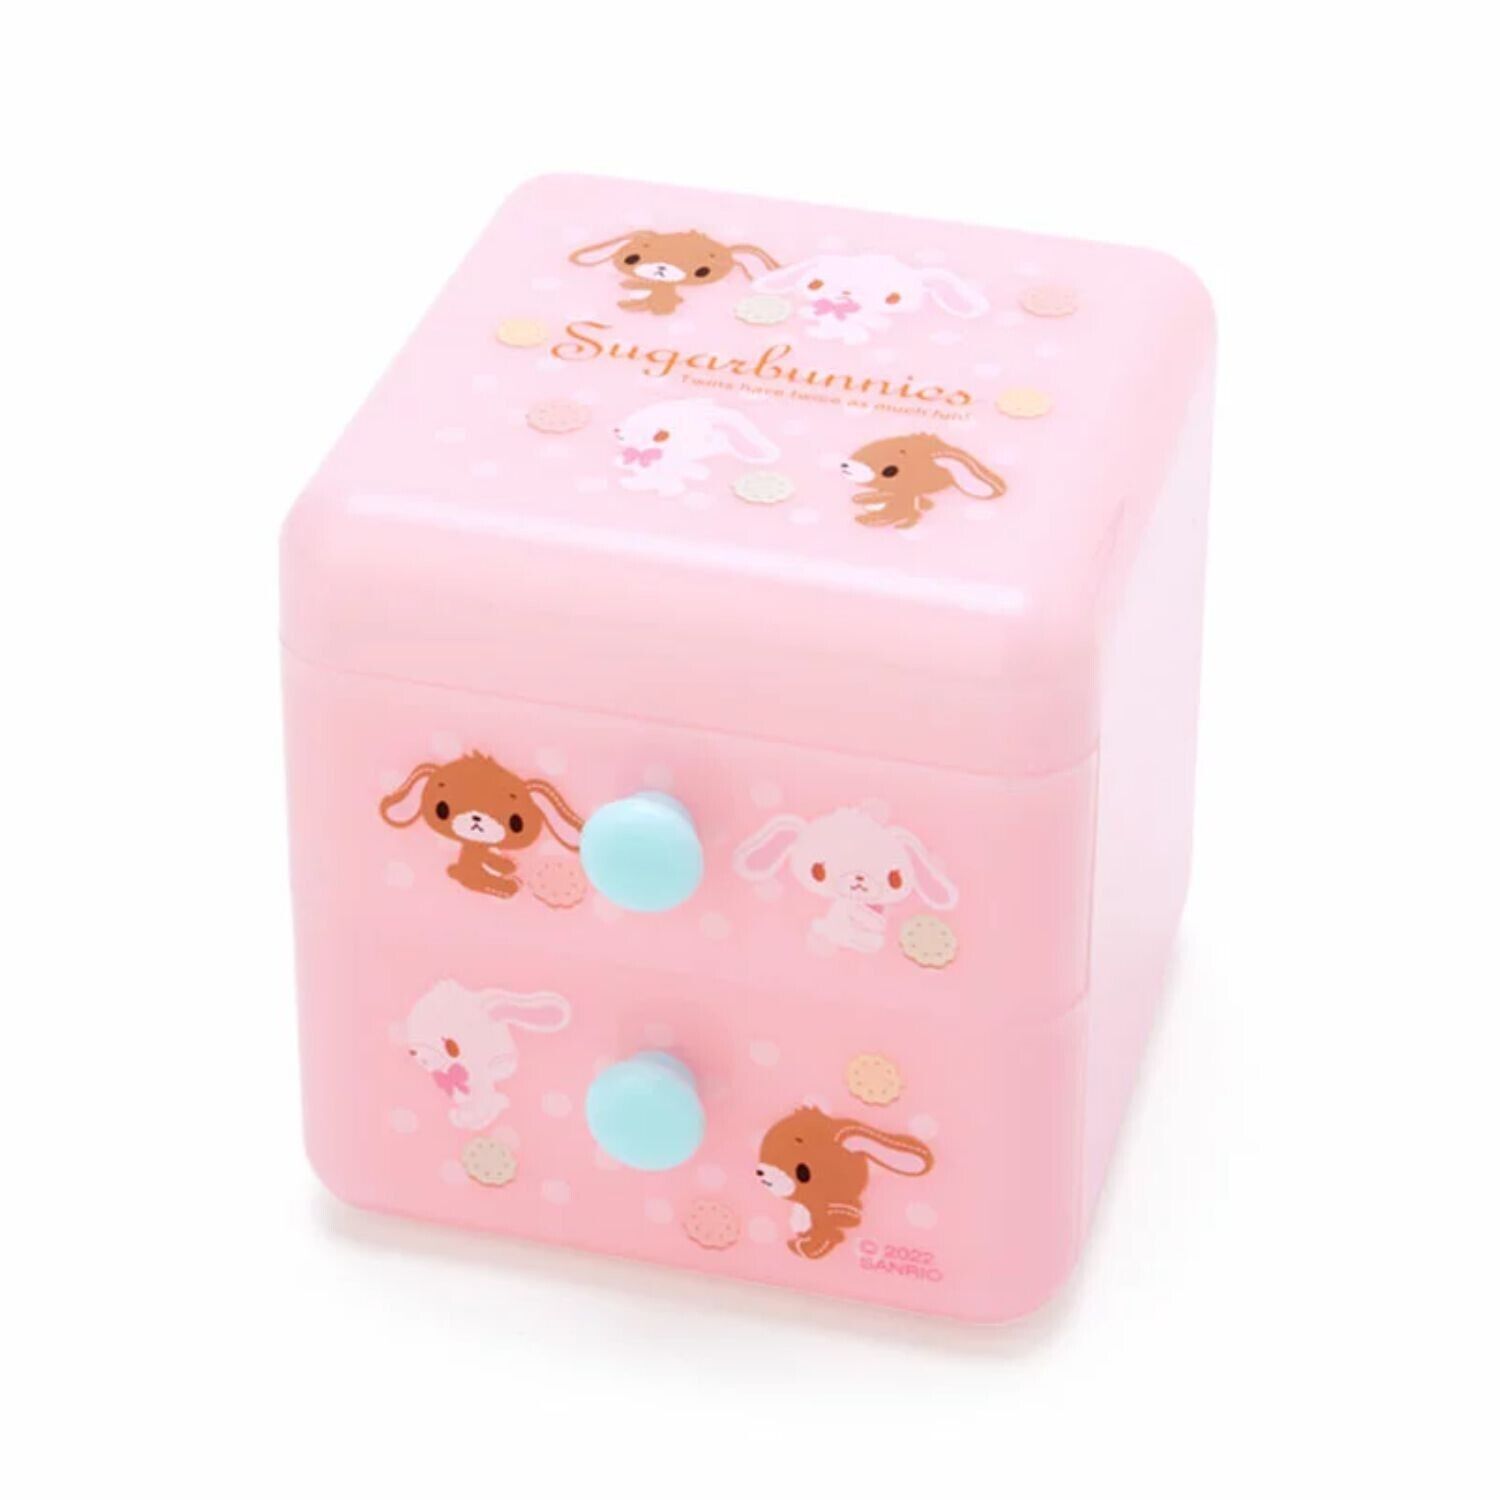 Sanrio Character Sugarbunnies Mini Chest (Memory Design ) Storage Box New Japan